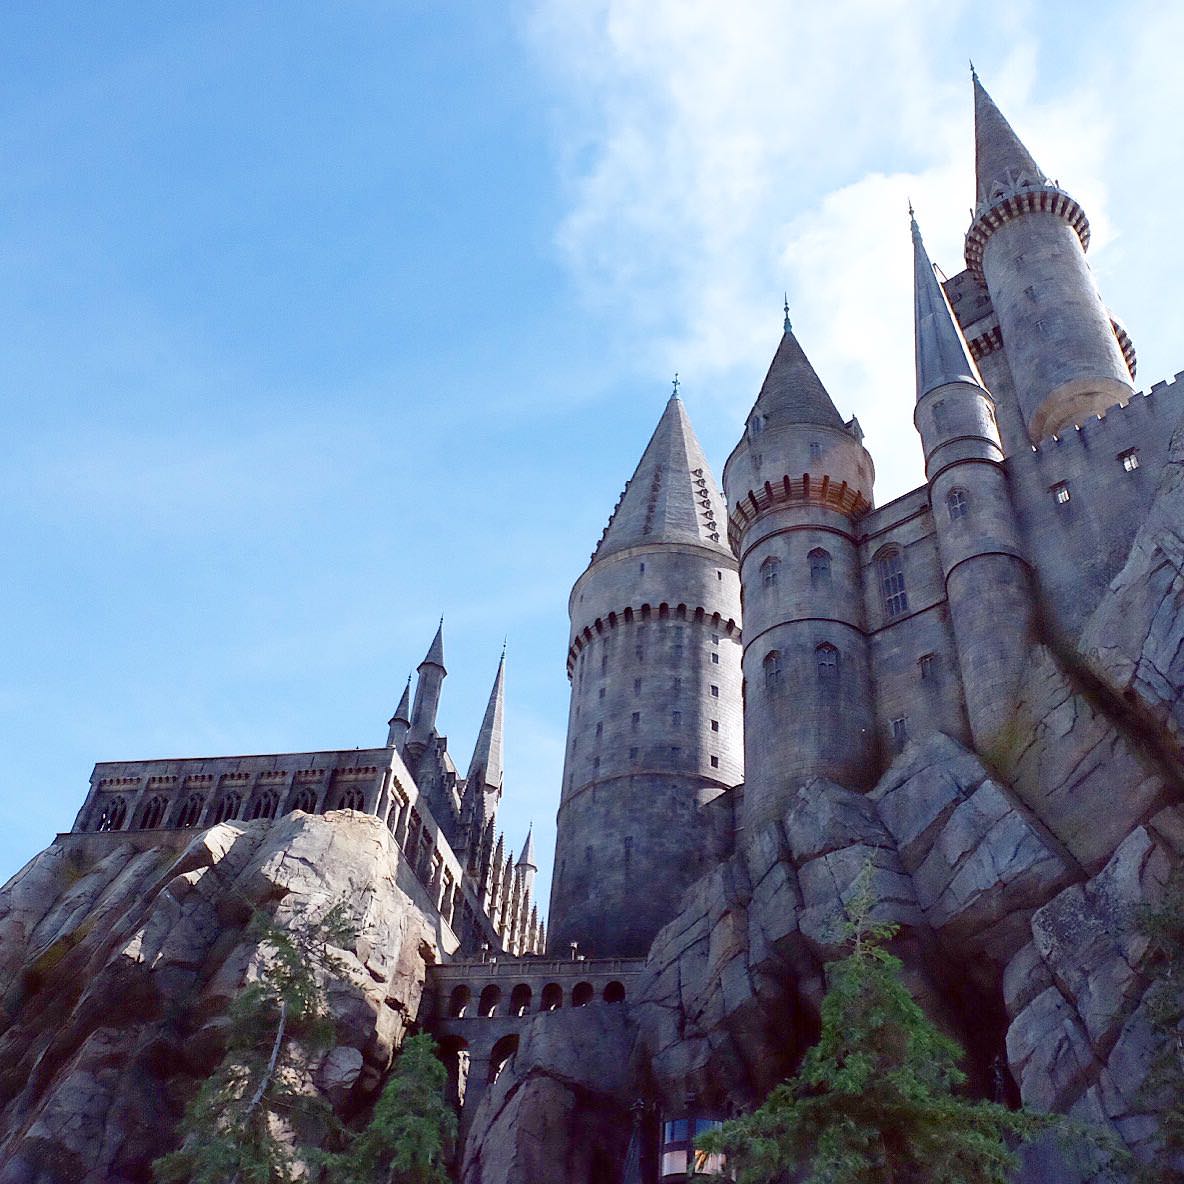 Hogwarts Caste at WWoHP at Universal Studios Hollywood